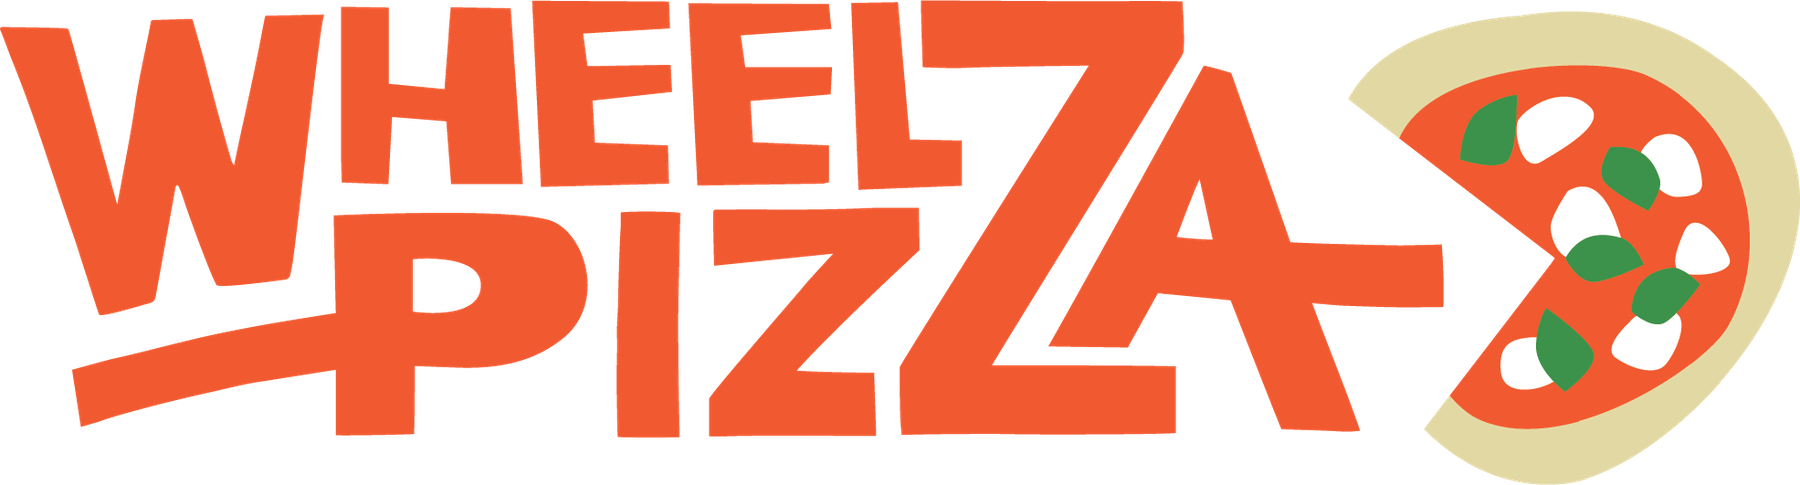 Wheelz Pizza South End logo top